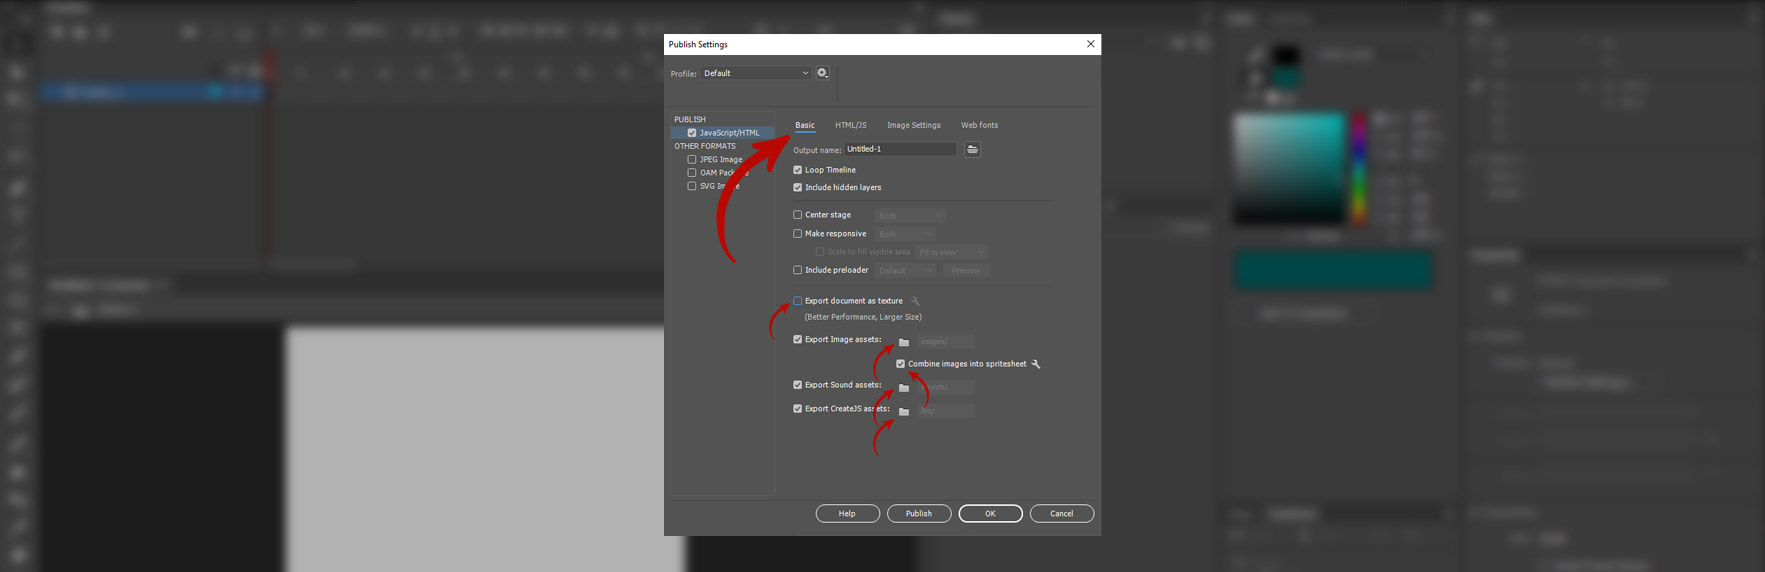 Скриншот программы Adobe Animate. Окно Publish Settings, настройка вкладки Basic